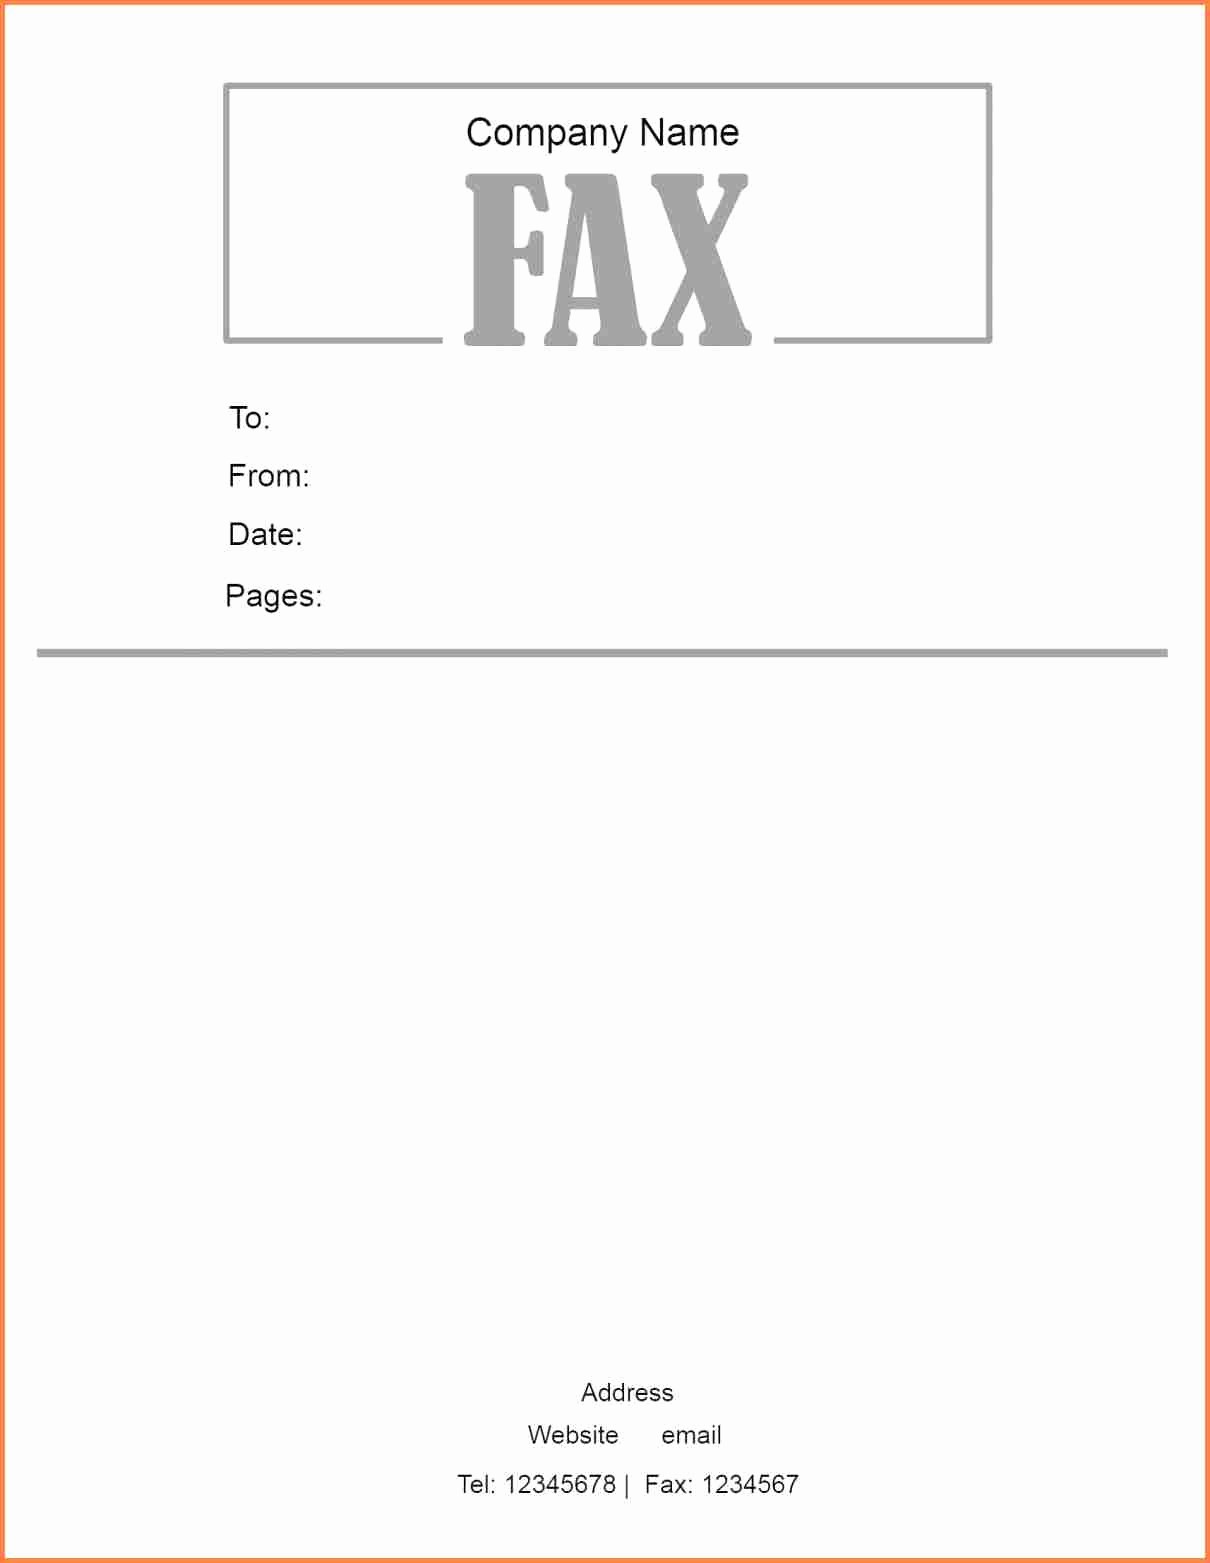 Standard Fax Cover Sheet Pdf New 11 Basic Fax Cover Sheet Pdf